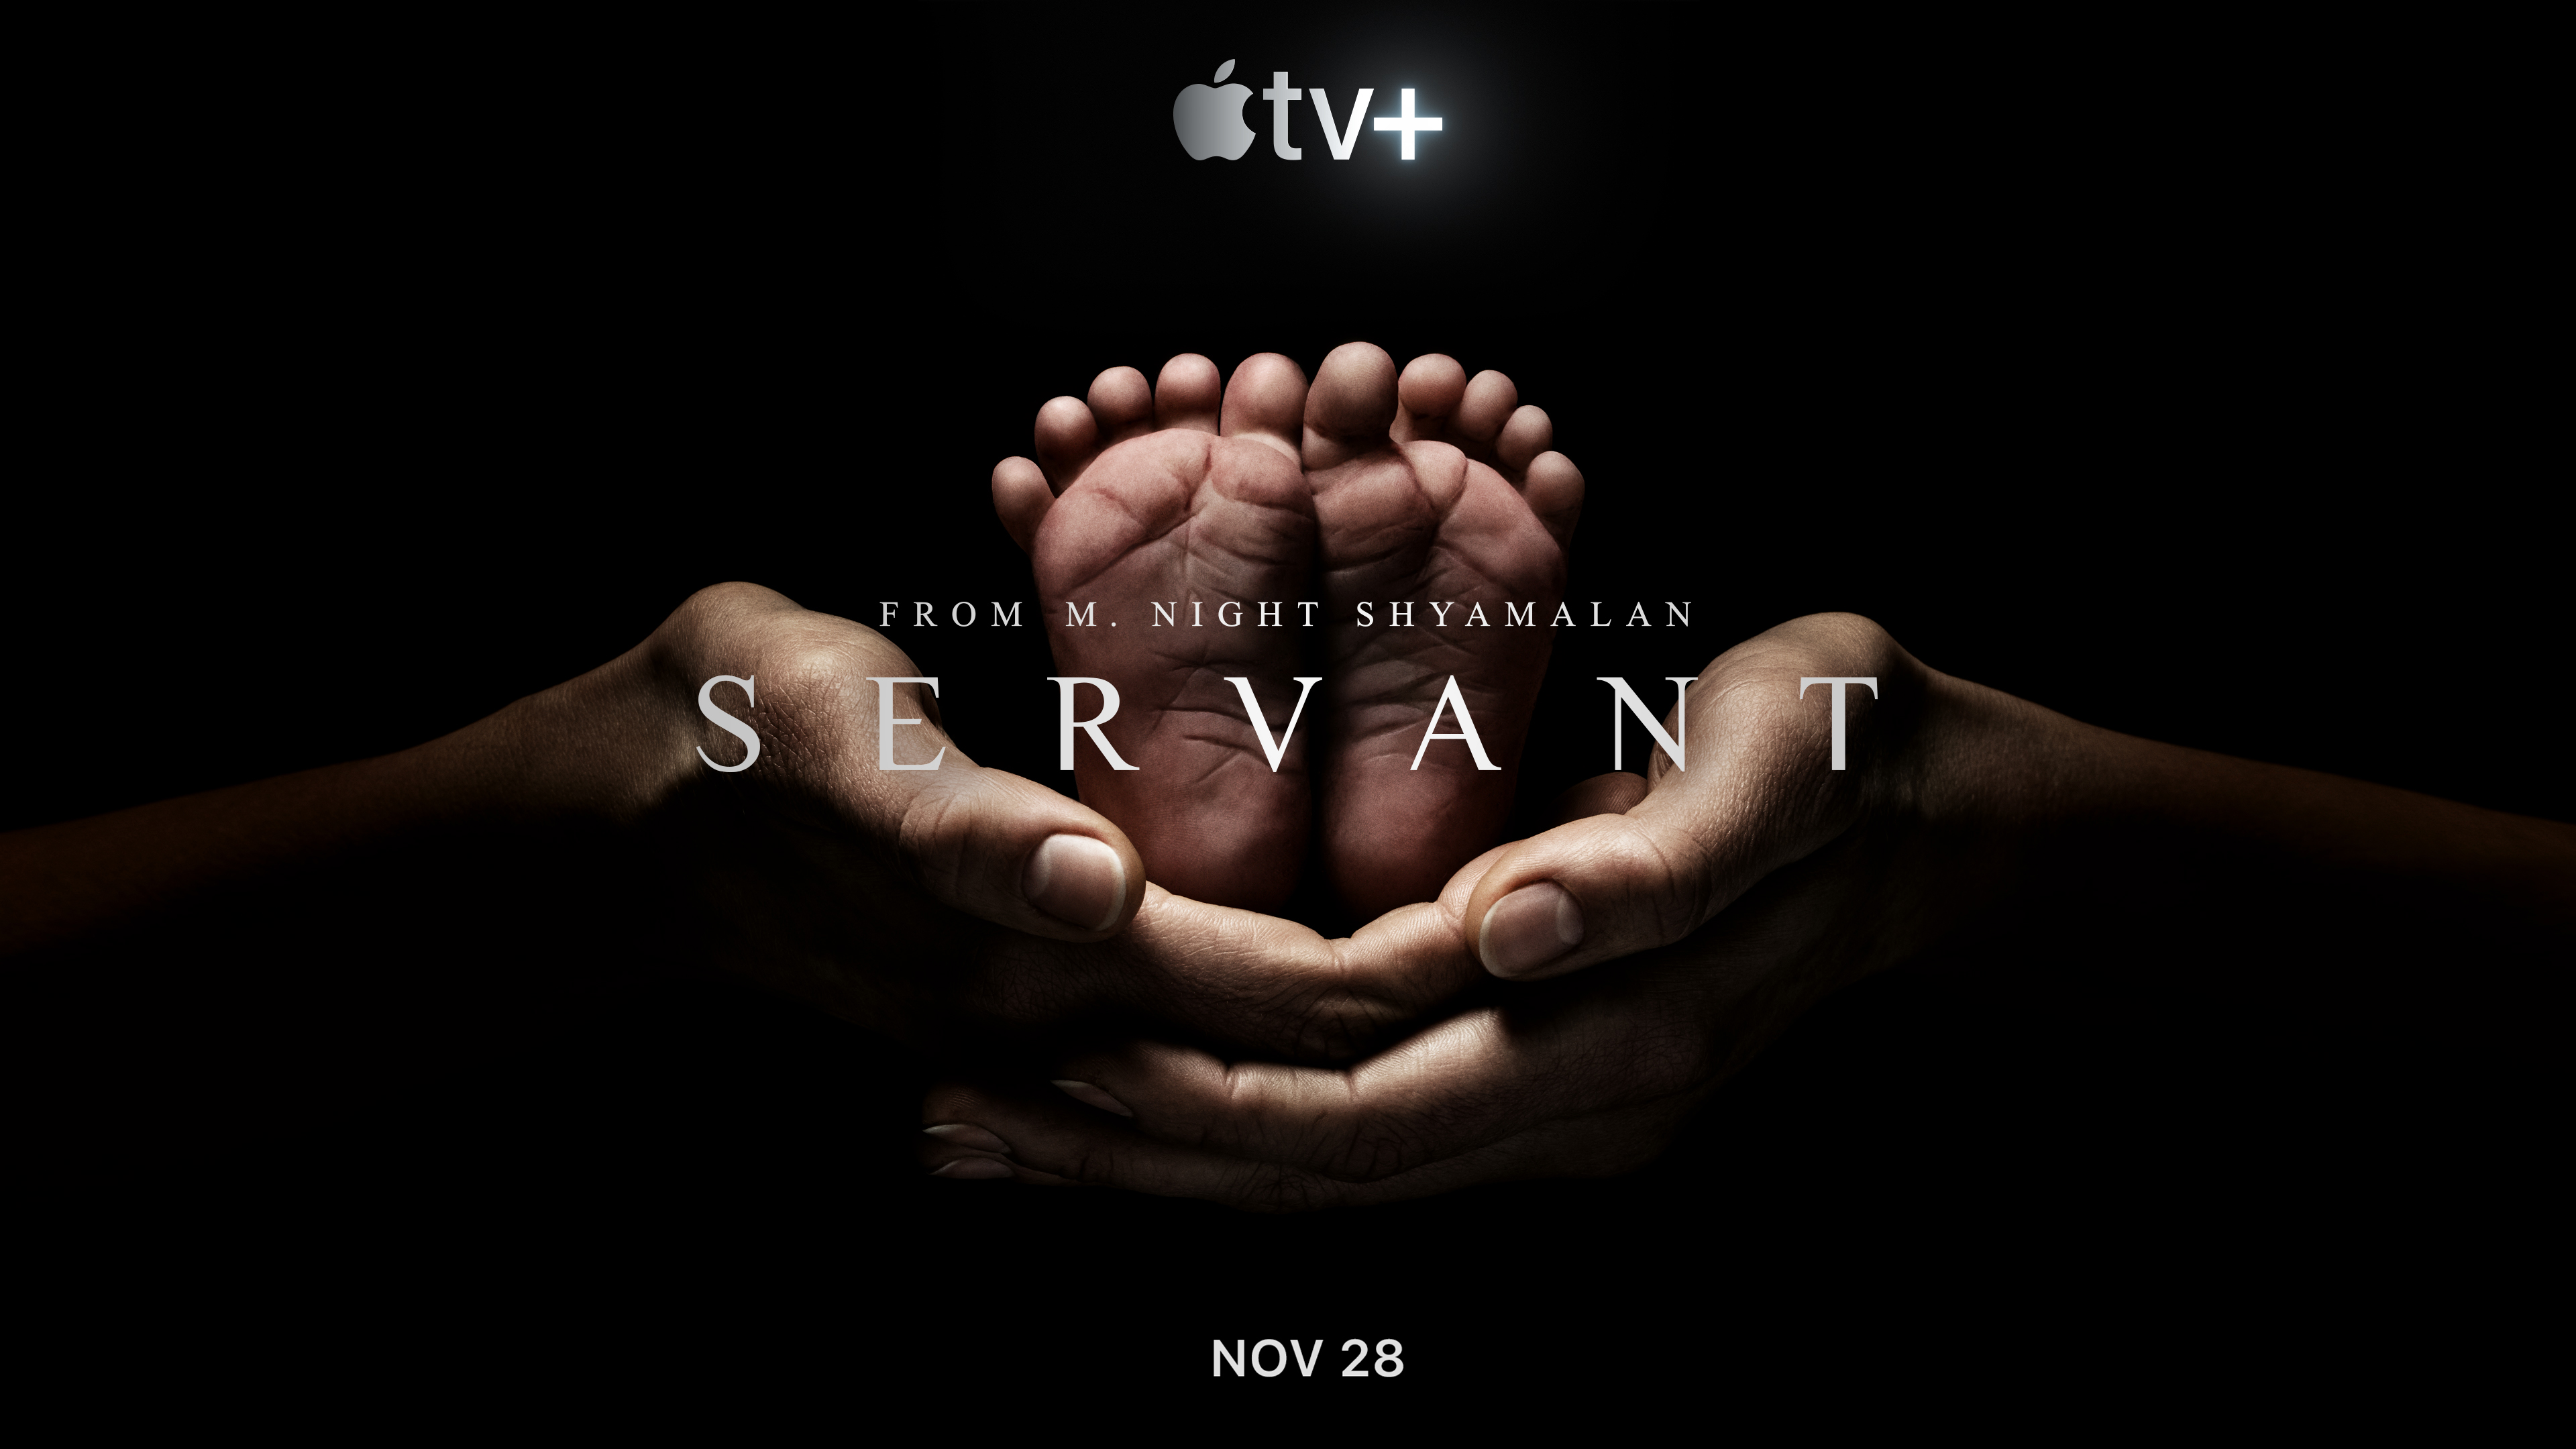 The Servent trailer